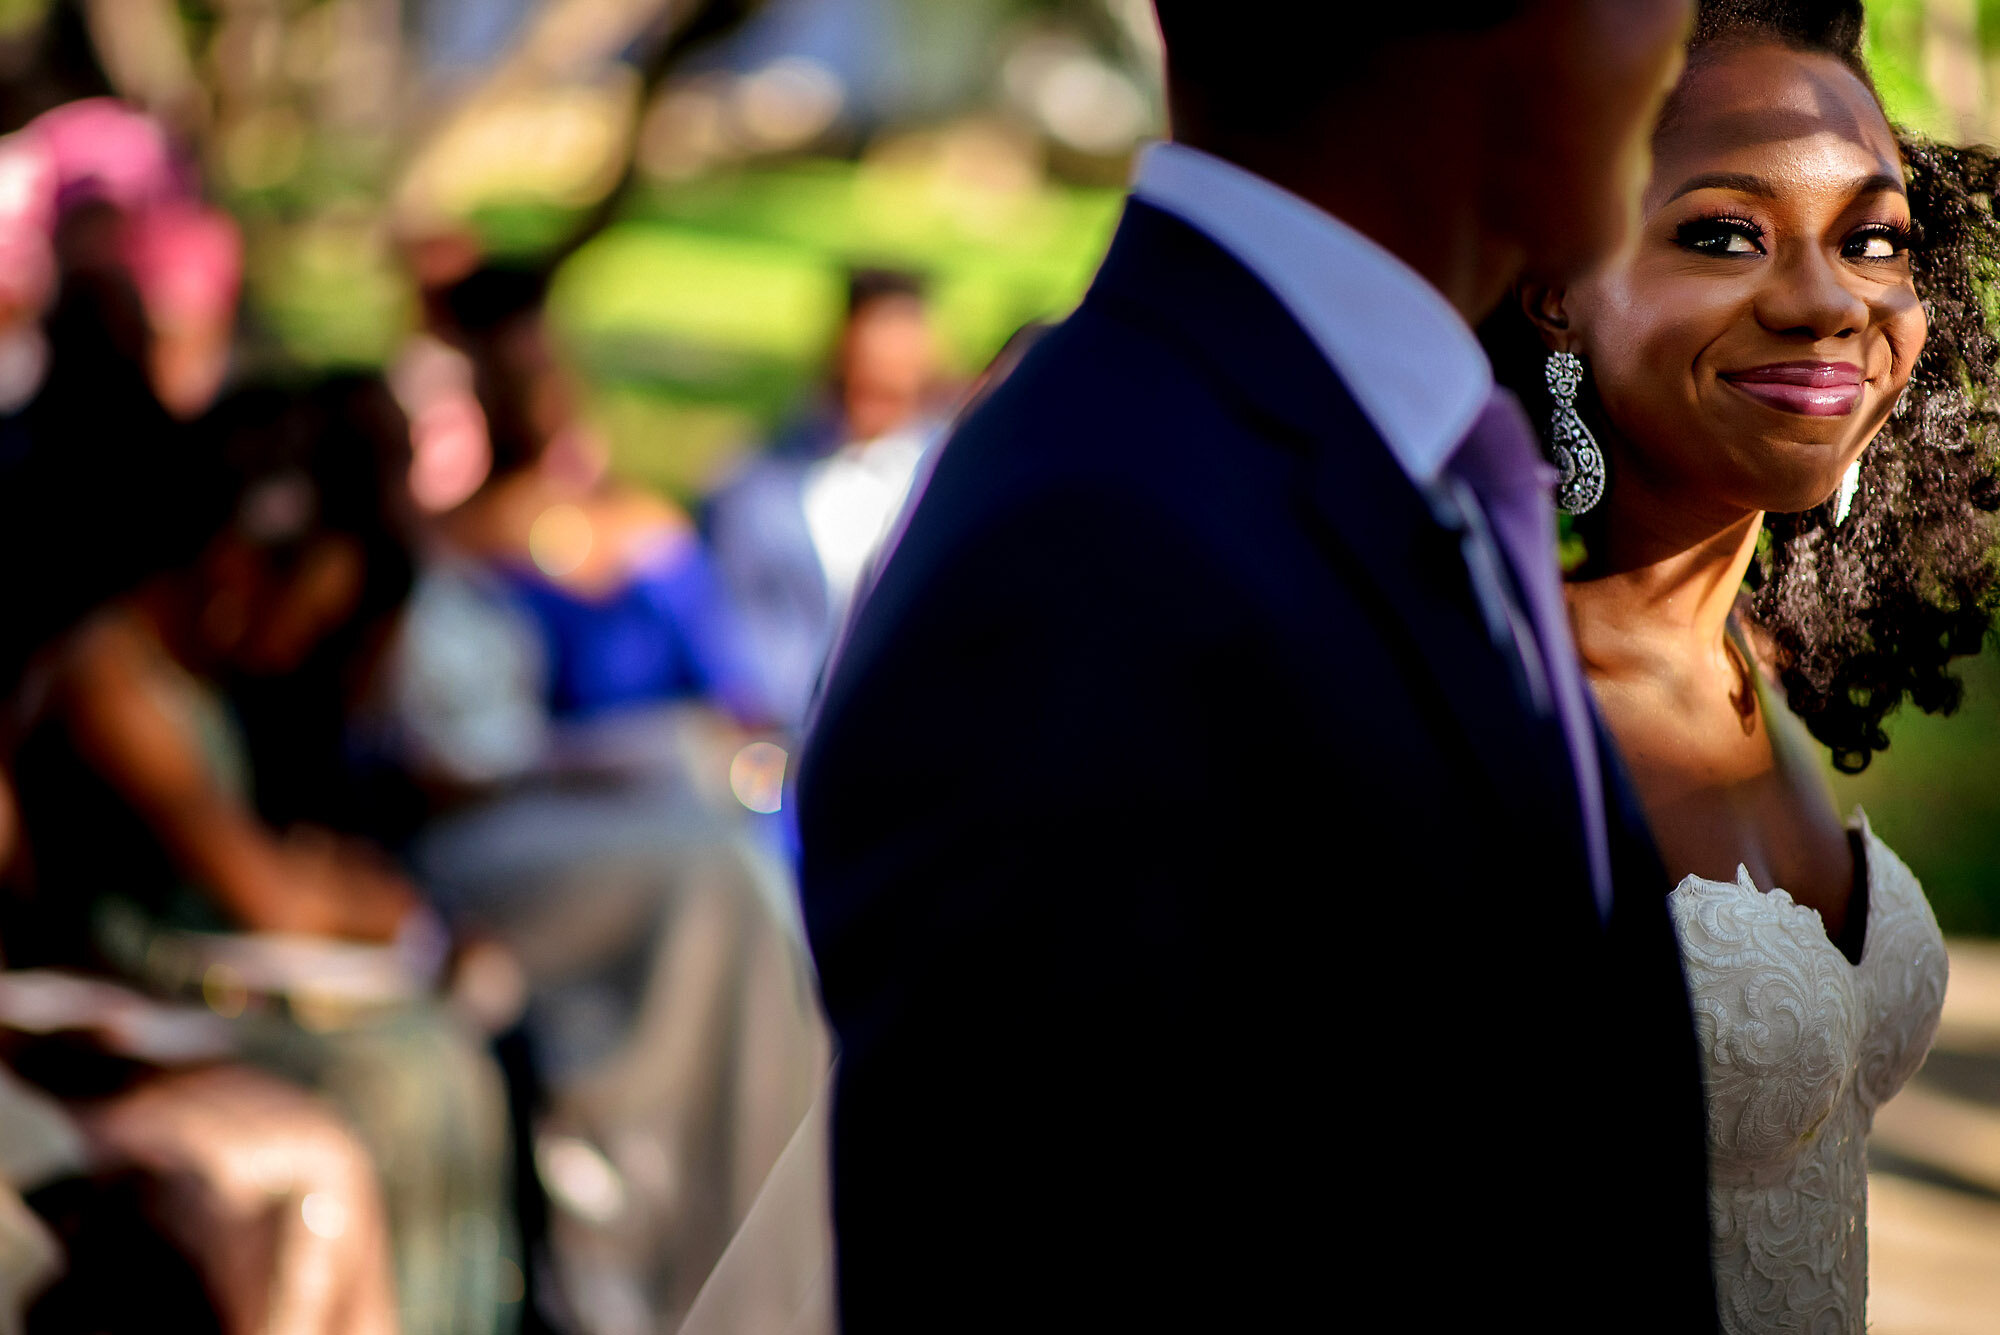 27-Austin-wedding-photographer-Jide-Alakija-bride looking endearingly at groom.jpg.JPG